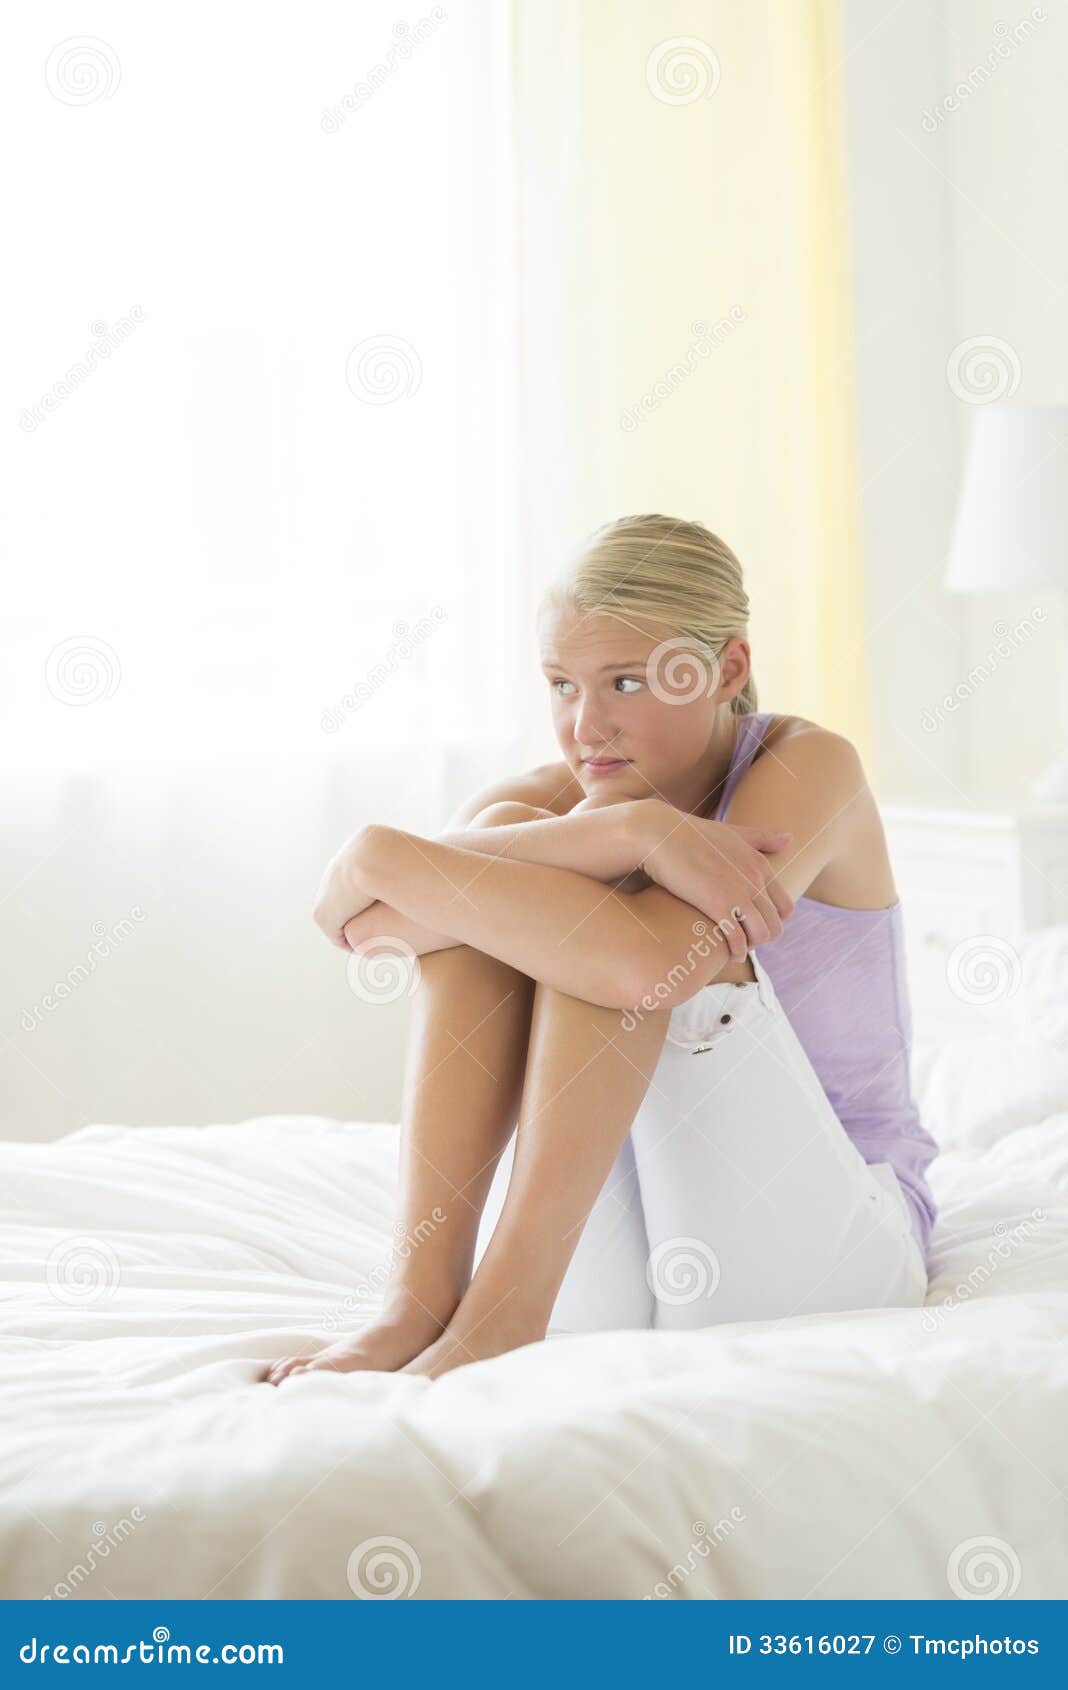 Sad Teenage Girl Hugging Knees On Bed Stock Image - Image of leisure